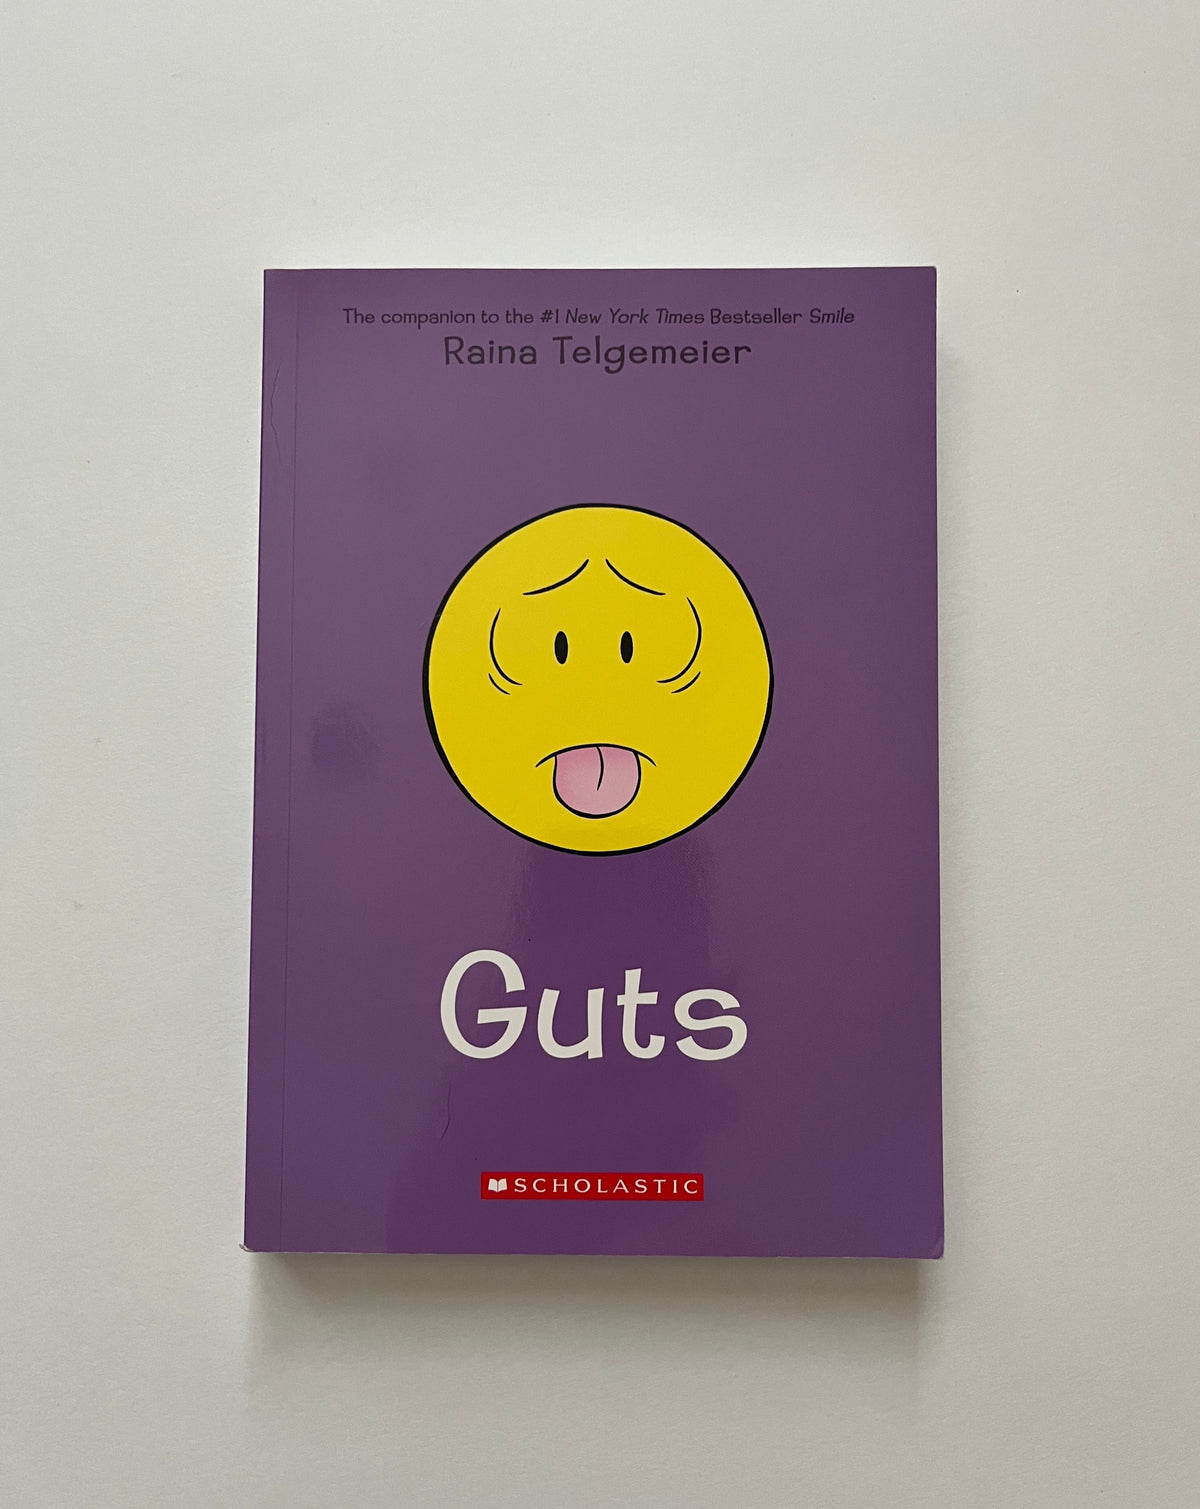 Guts by Raina Telgemeier